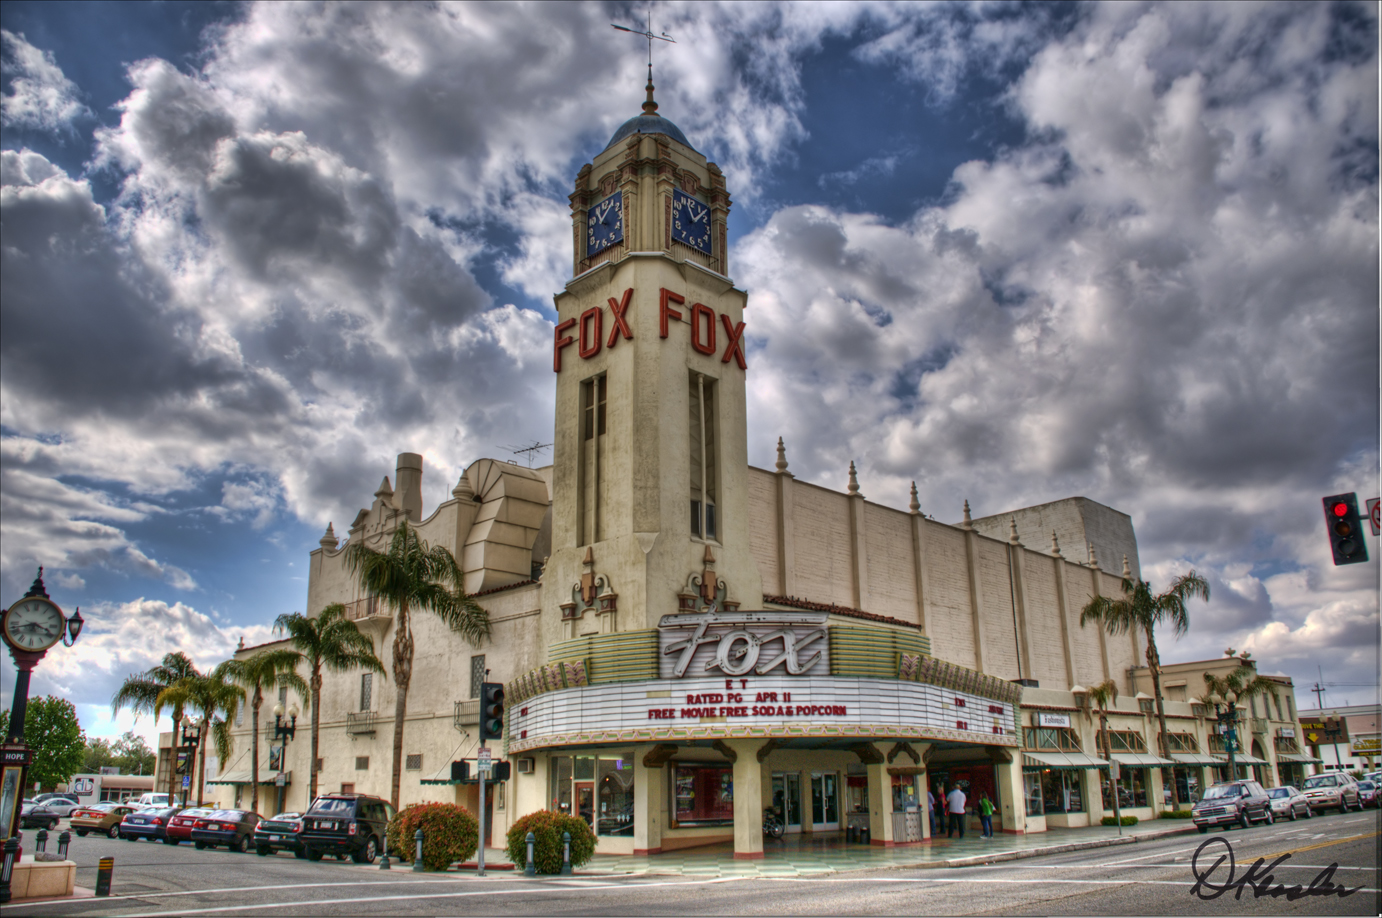 4/11/09- The Fox Theater